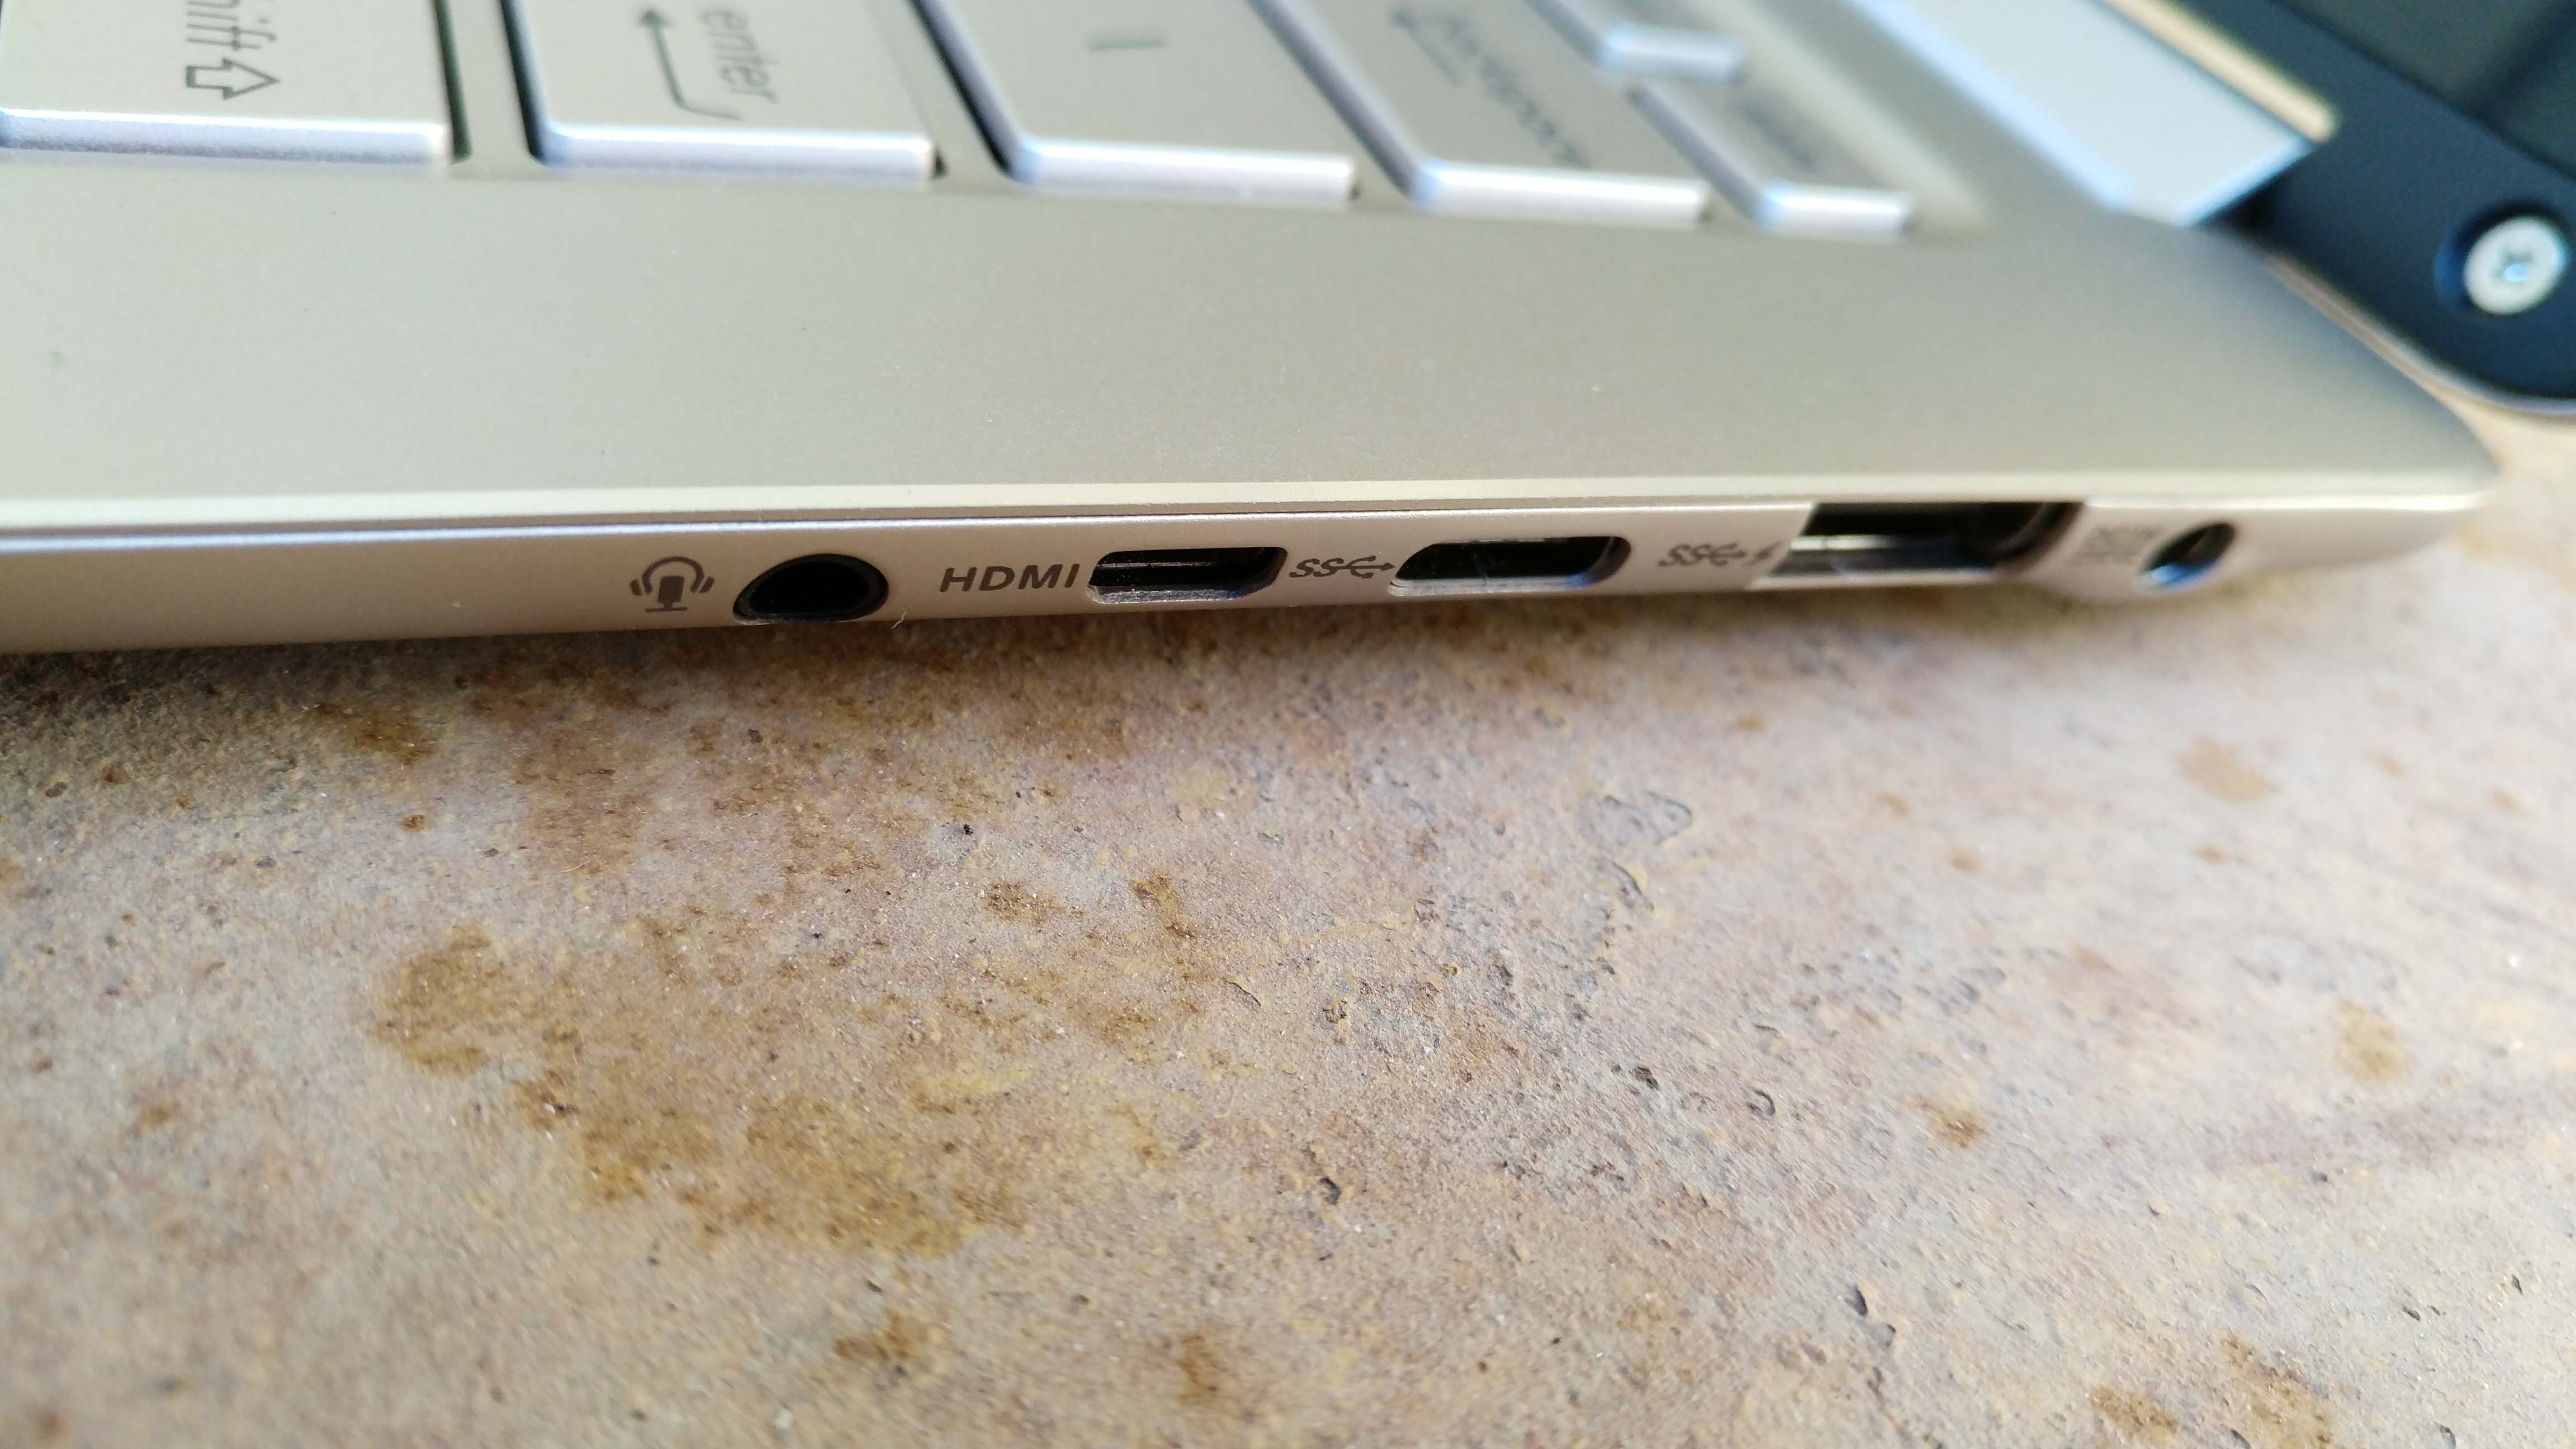 Asus Zenbook Flip ports